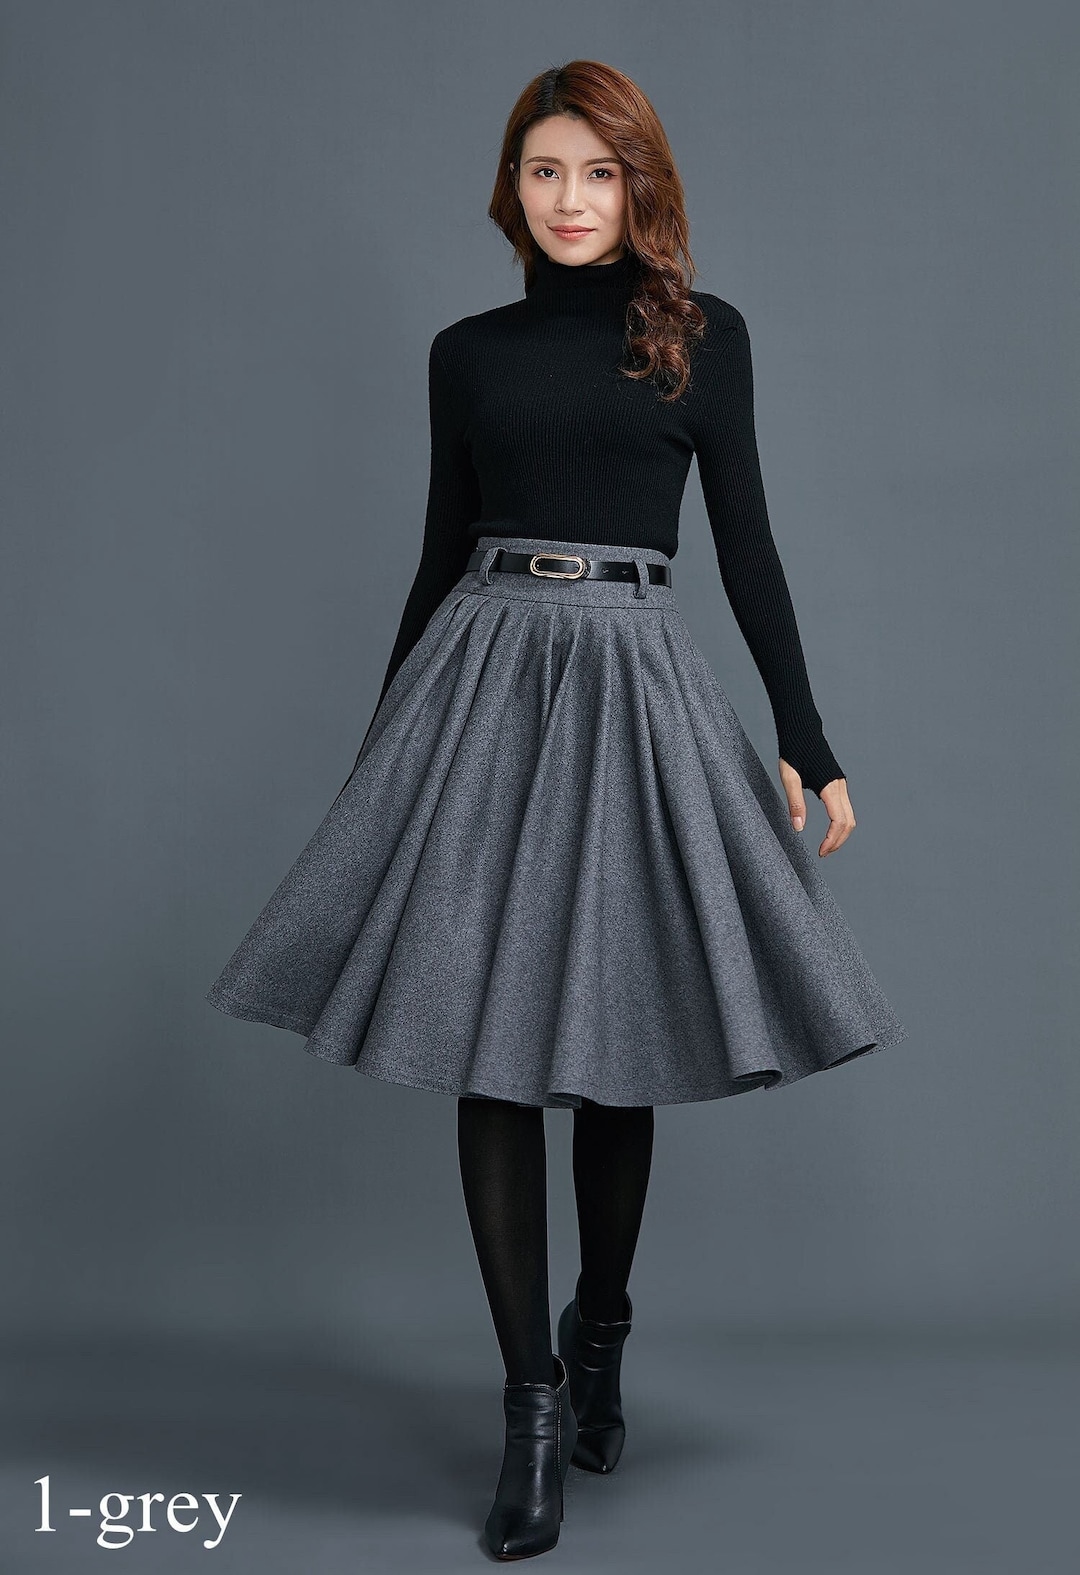 Mini Flared Skirt, Custom Handmade, Fully Lined, Wide Choices of Fabric  Colors – Elizabeth's Custom Skirts